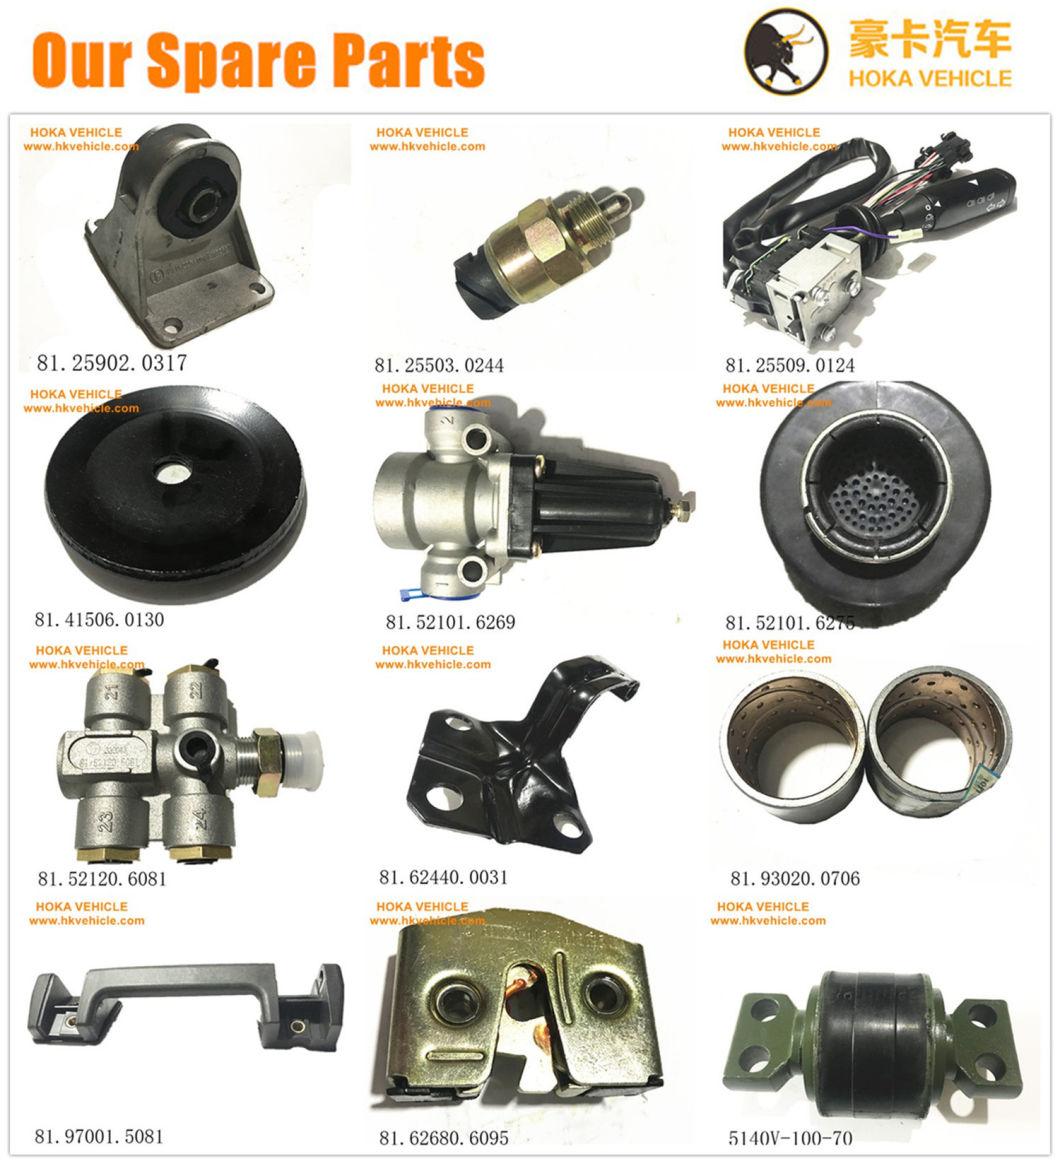 Original Wheel Loader Spare Parts Round Nut 03b1179 for Wheel Loader/Grader Motor